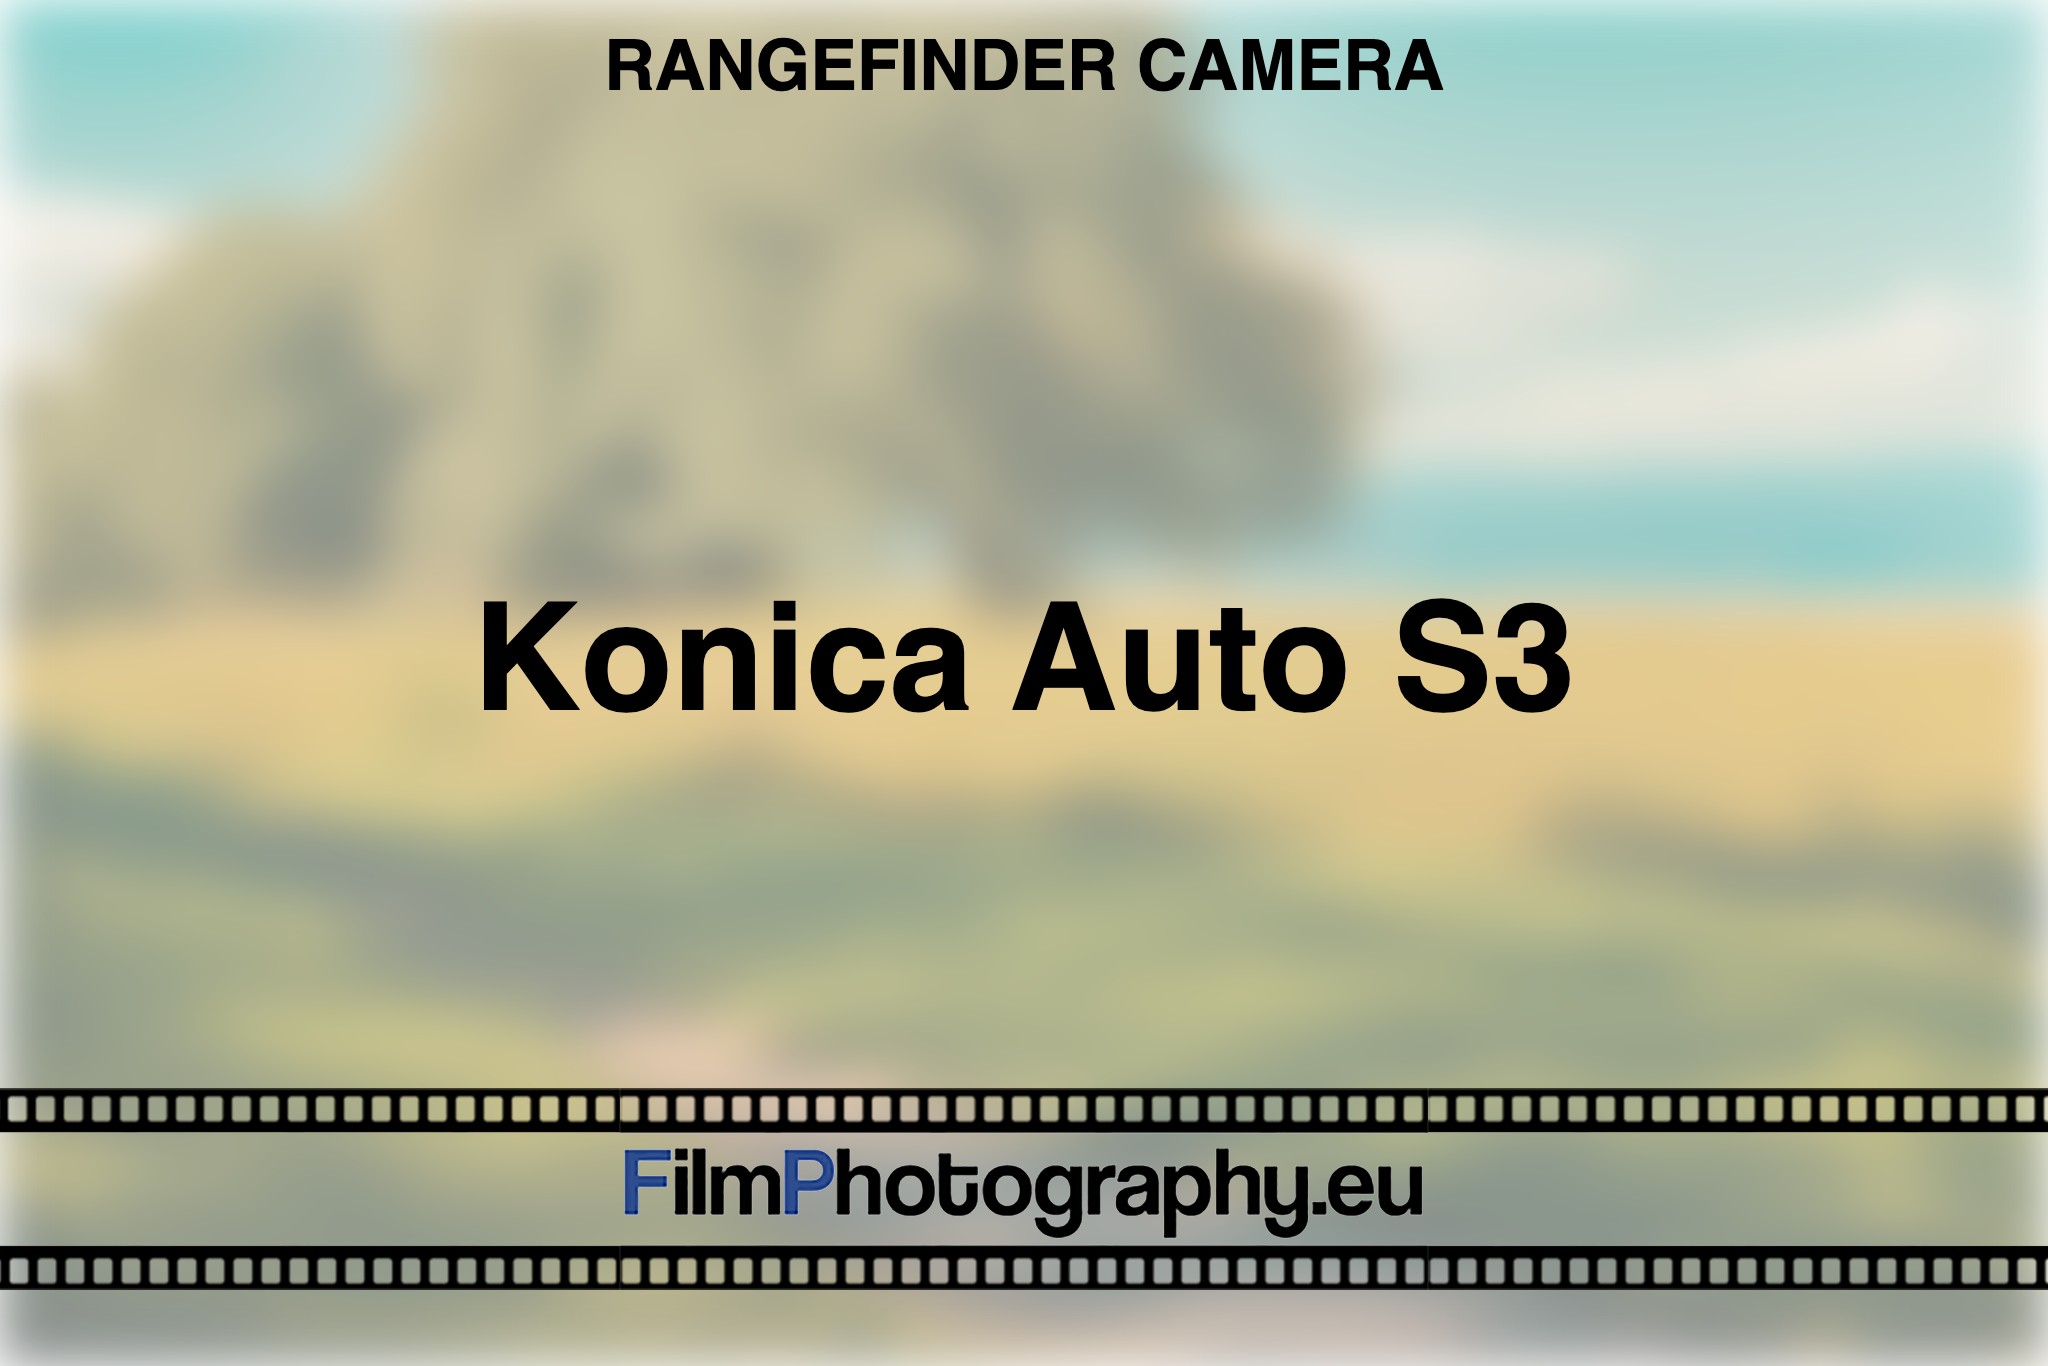 konica-auto-s3-rangefinder-camera-bnv